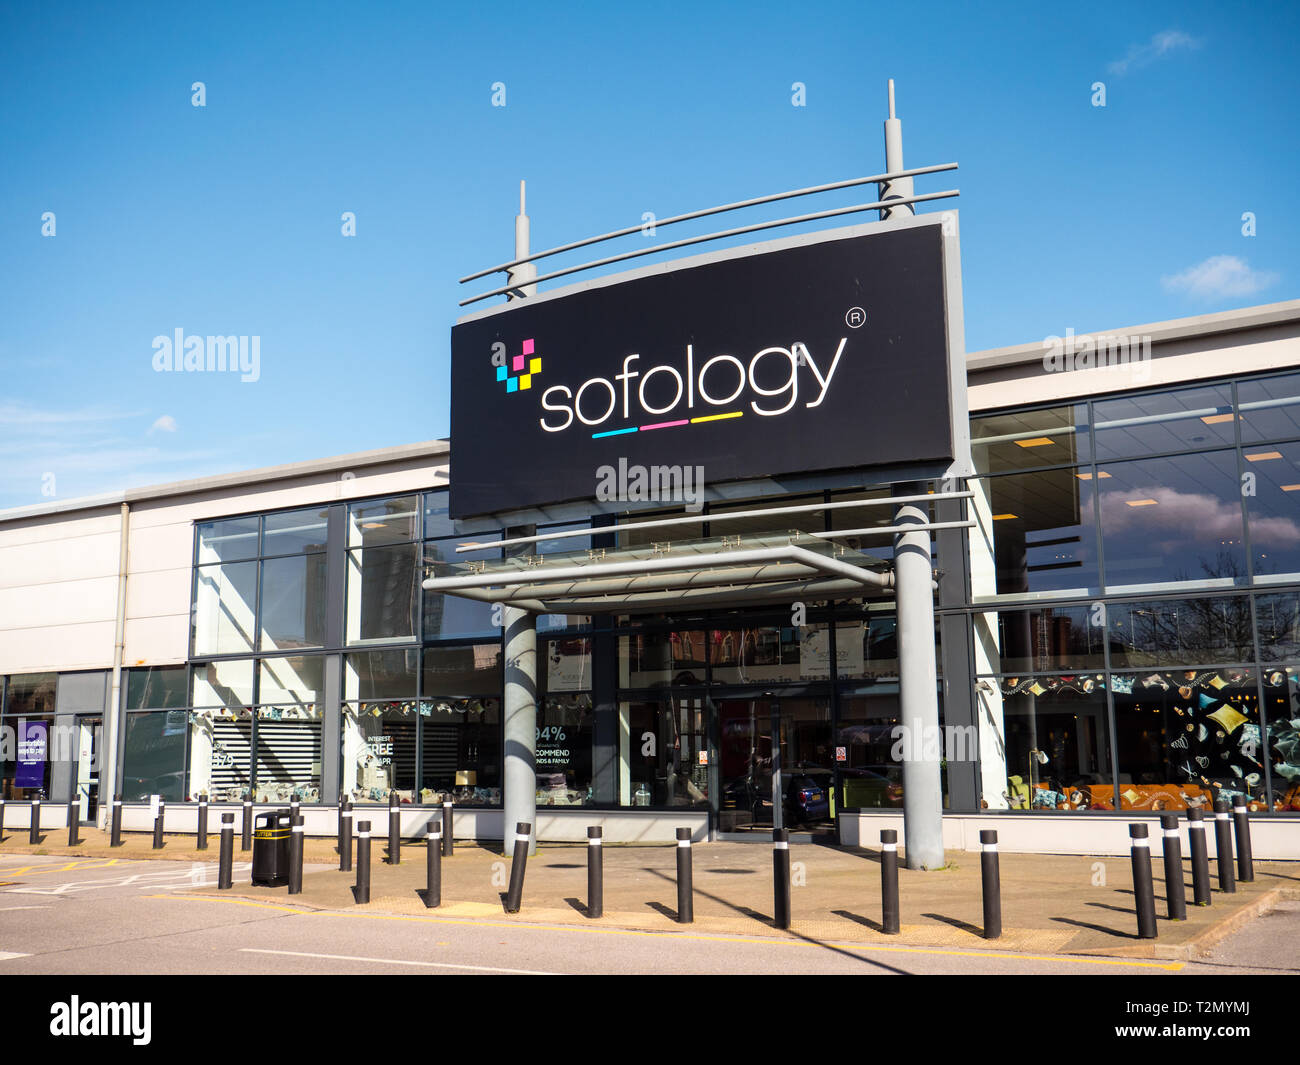 Sofology Spezialist Sofa Einzelhändler, Forbury Retail Park, Reading,  Berkshire, England, UK, GB Stockfotografie - Alamy